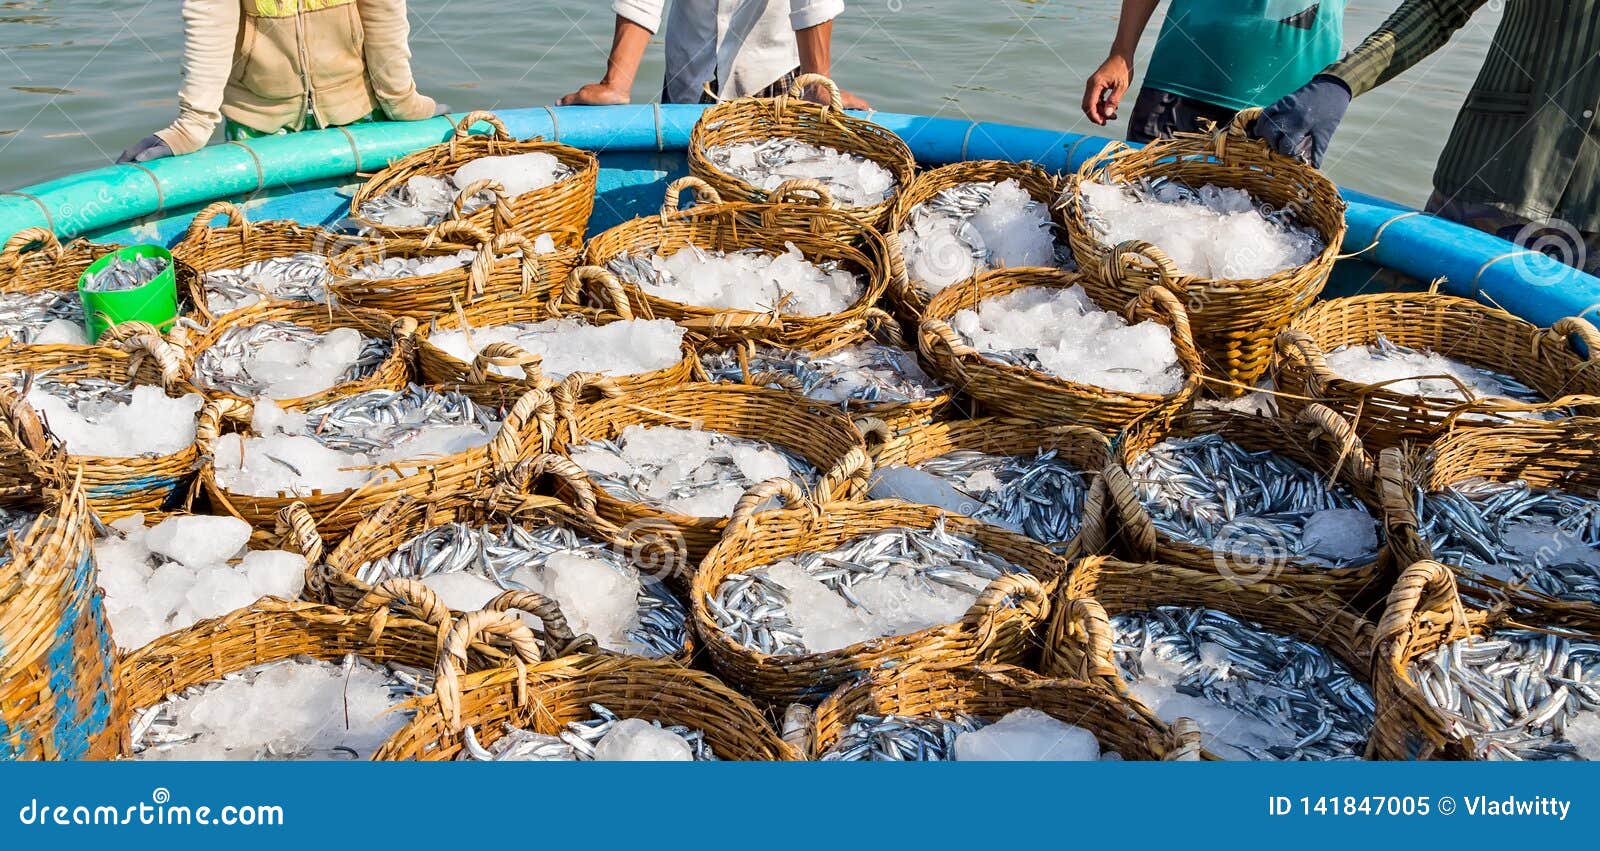 Catch of Fish Ice in Basket Vietnamese Fishing Village Vietnam Stock Image  - Image of gourmet, cuisine: 141847005